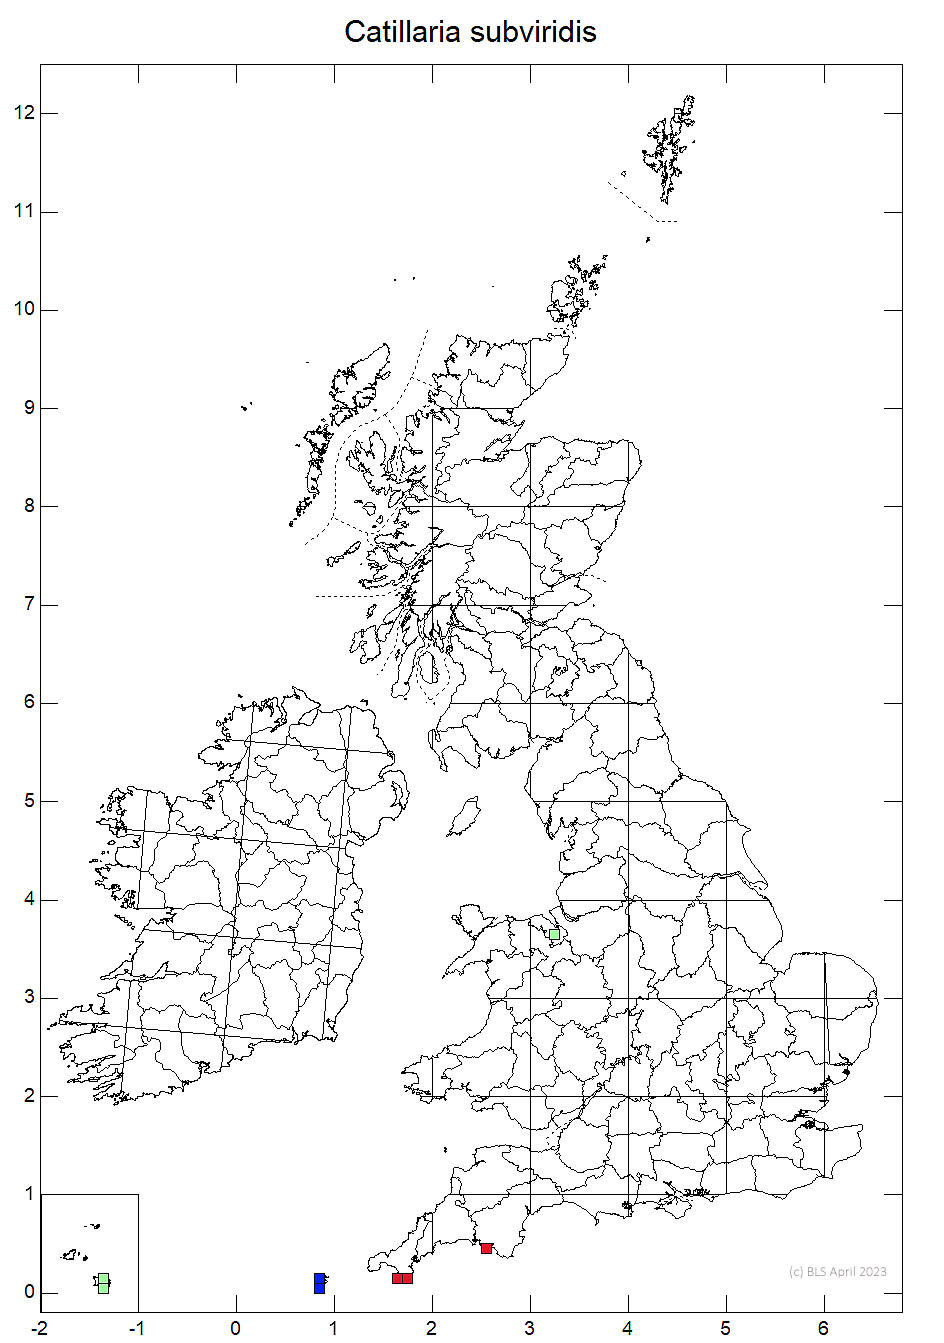 Catillaria subviridis 10km sq distribution map